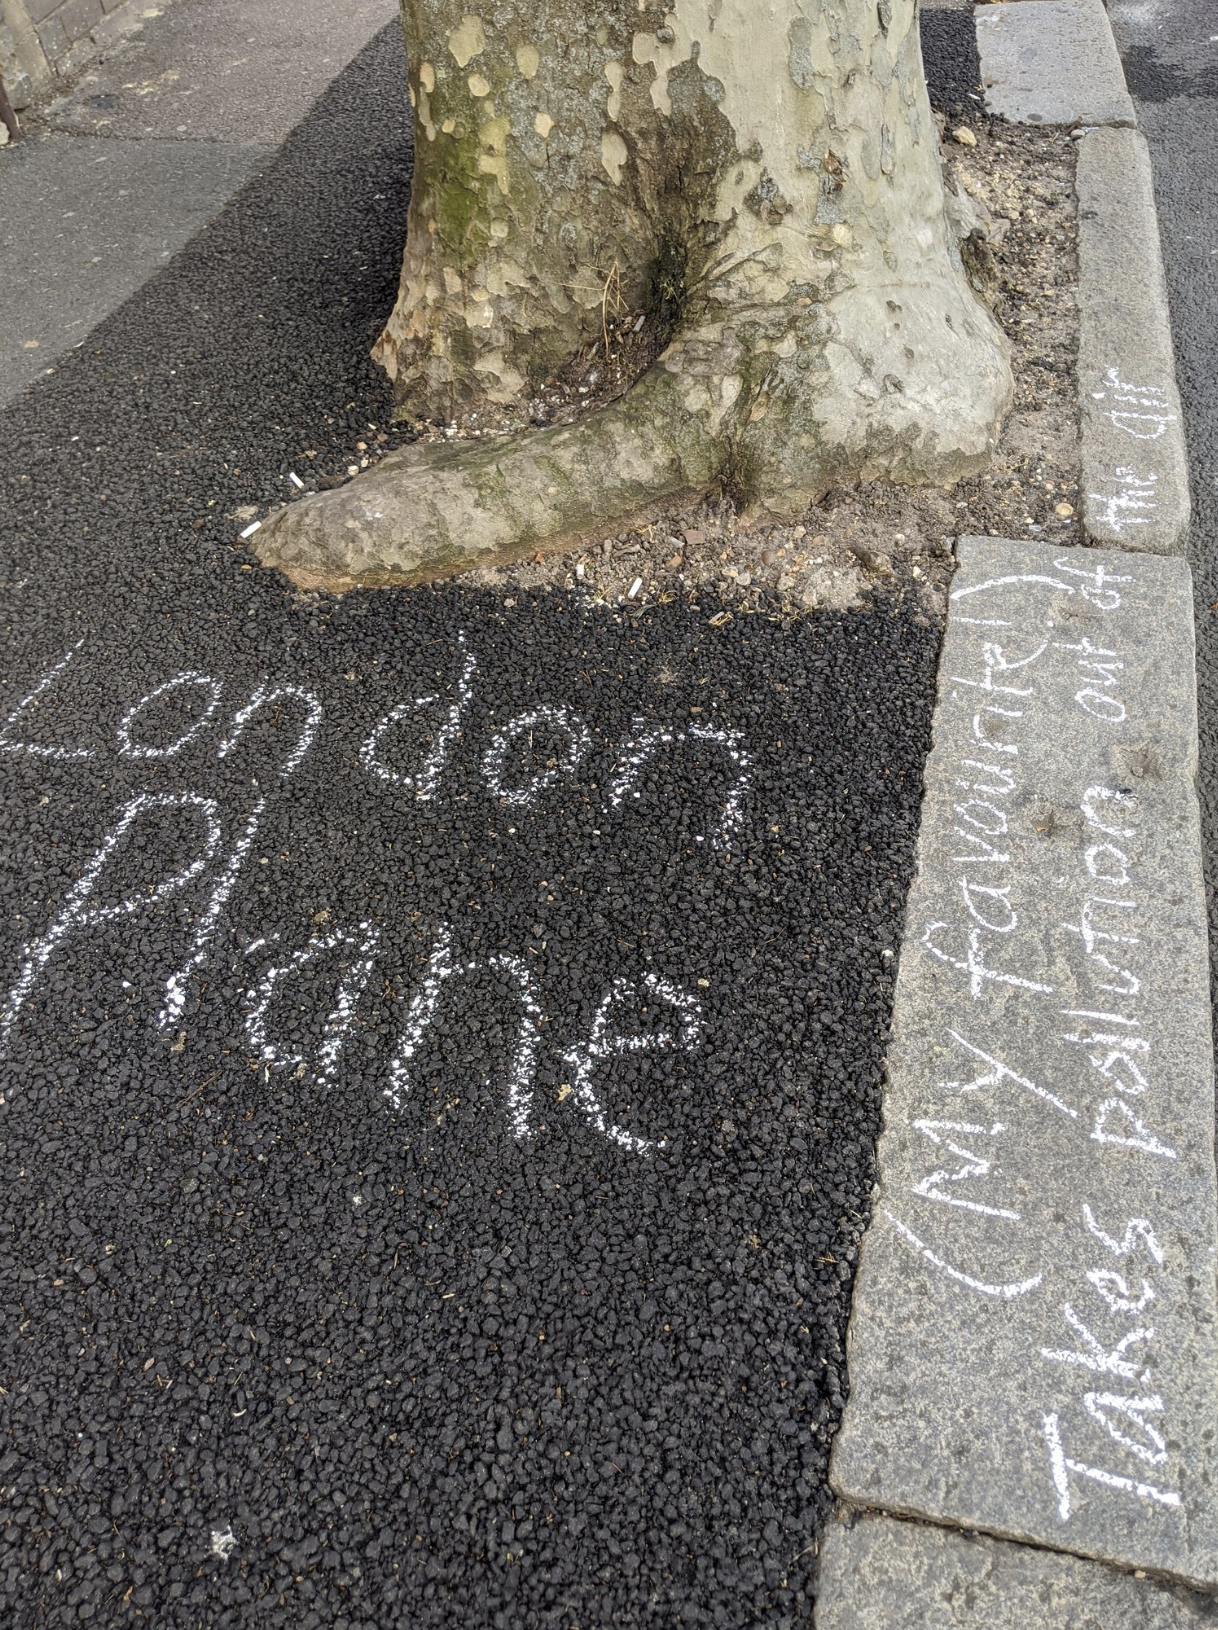 London Plane Tree